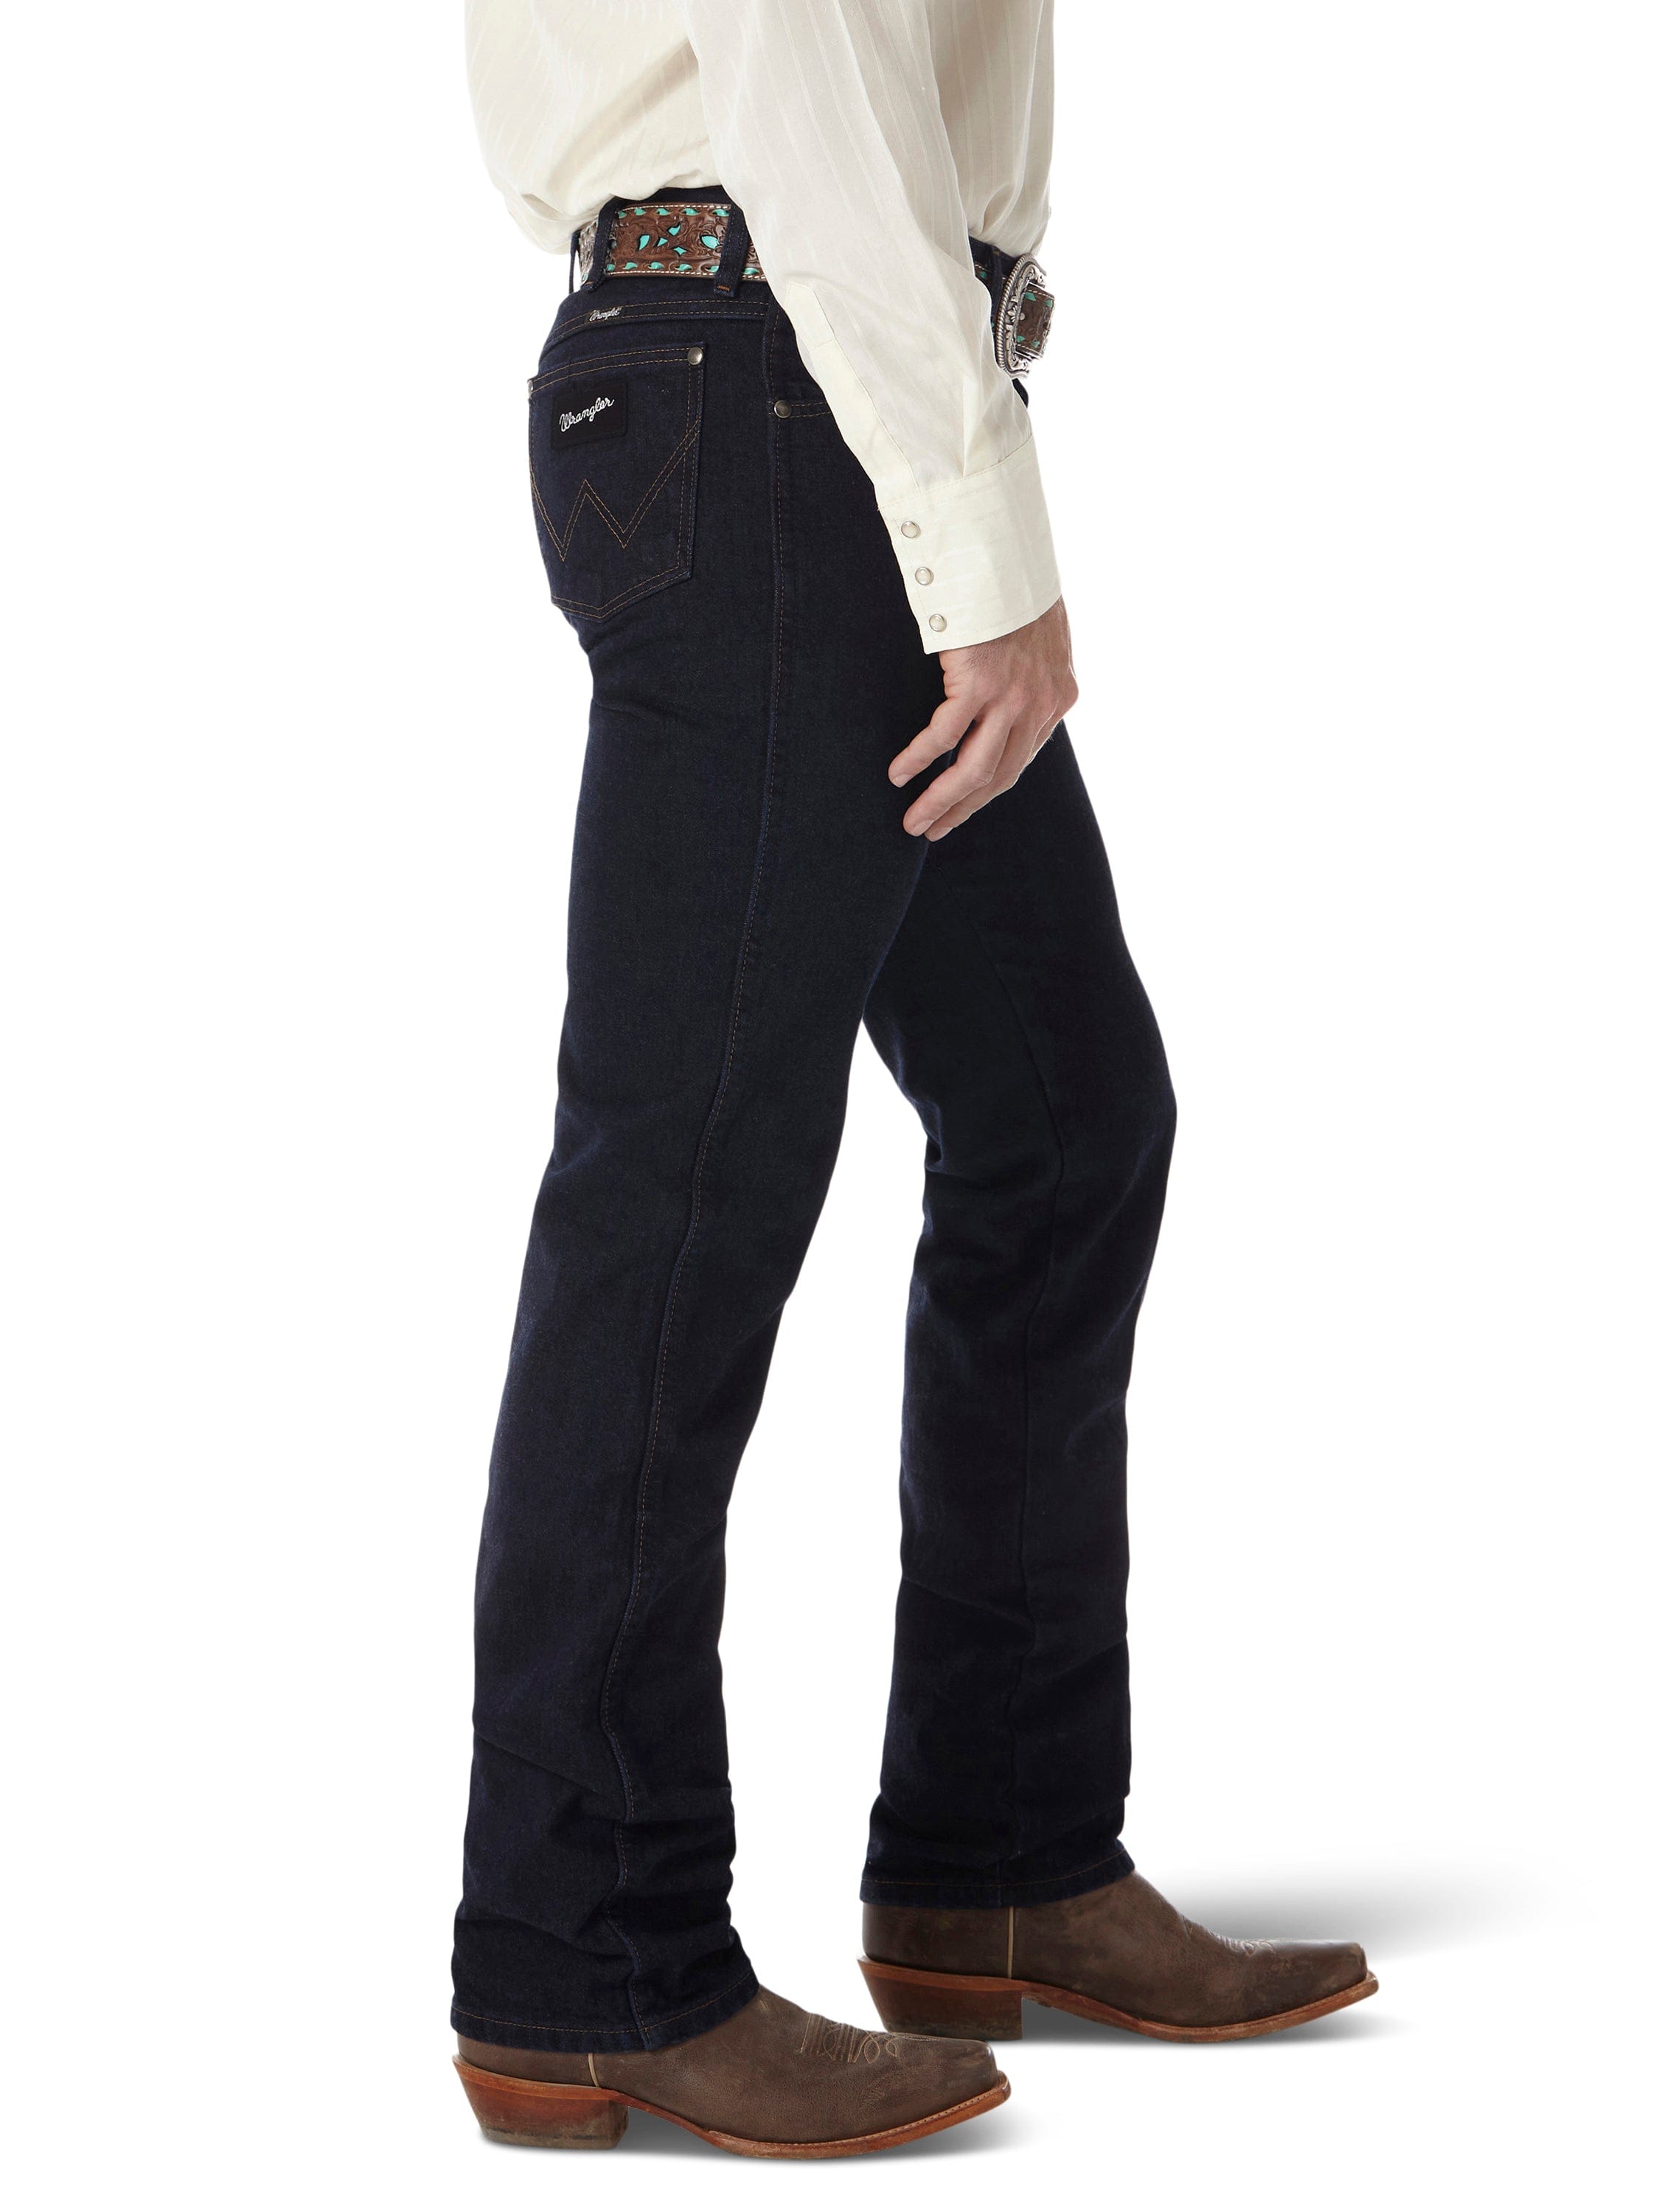 Wrangler Men's Cowboy Cut Silver Edition Dark Denim Slim Fit Jeans